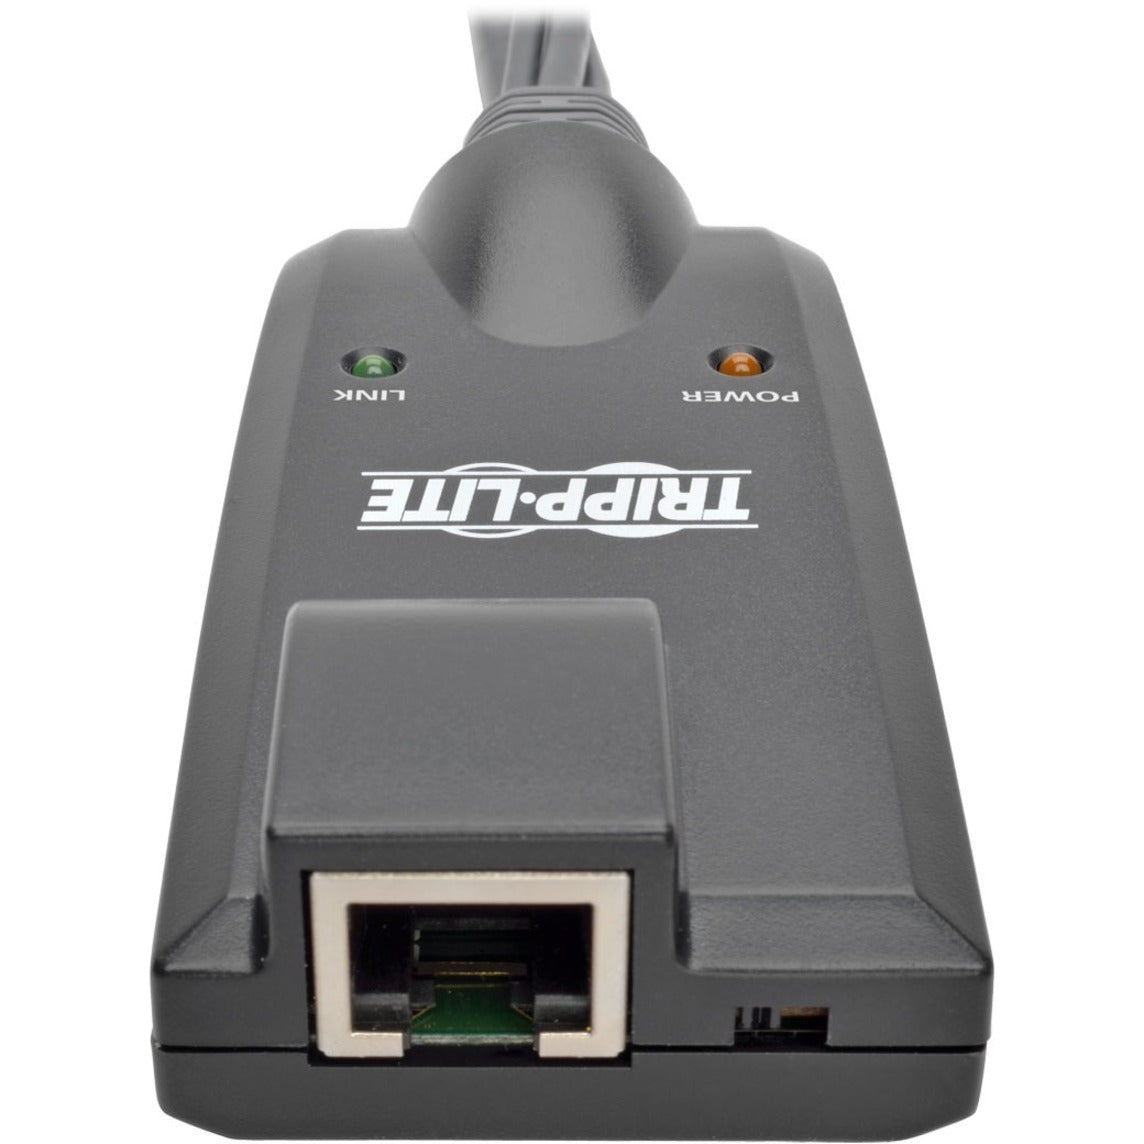 Tripp Lite B055-001-USB-VA NetDirector USB Server Schnittstelleneinheit KVM Extender mit USB VGA Kopfhörer Mikrofon und Netzwerk (RJ-45) Anschlüssen